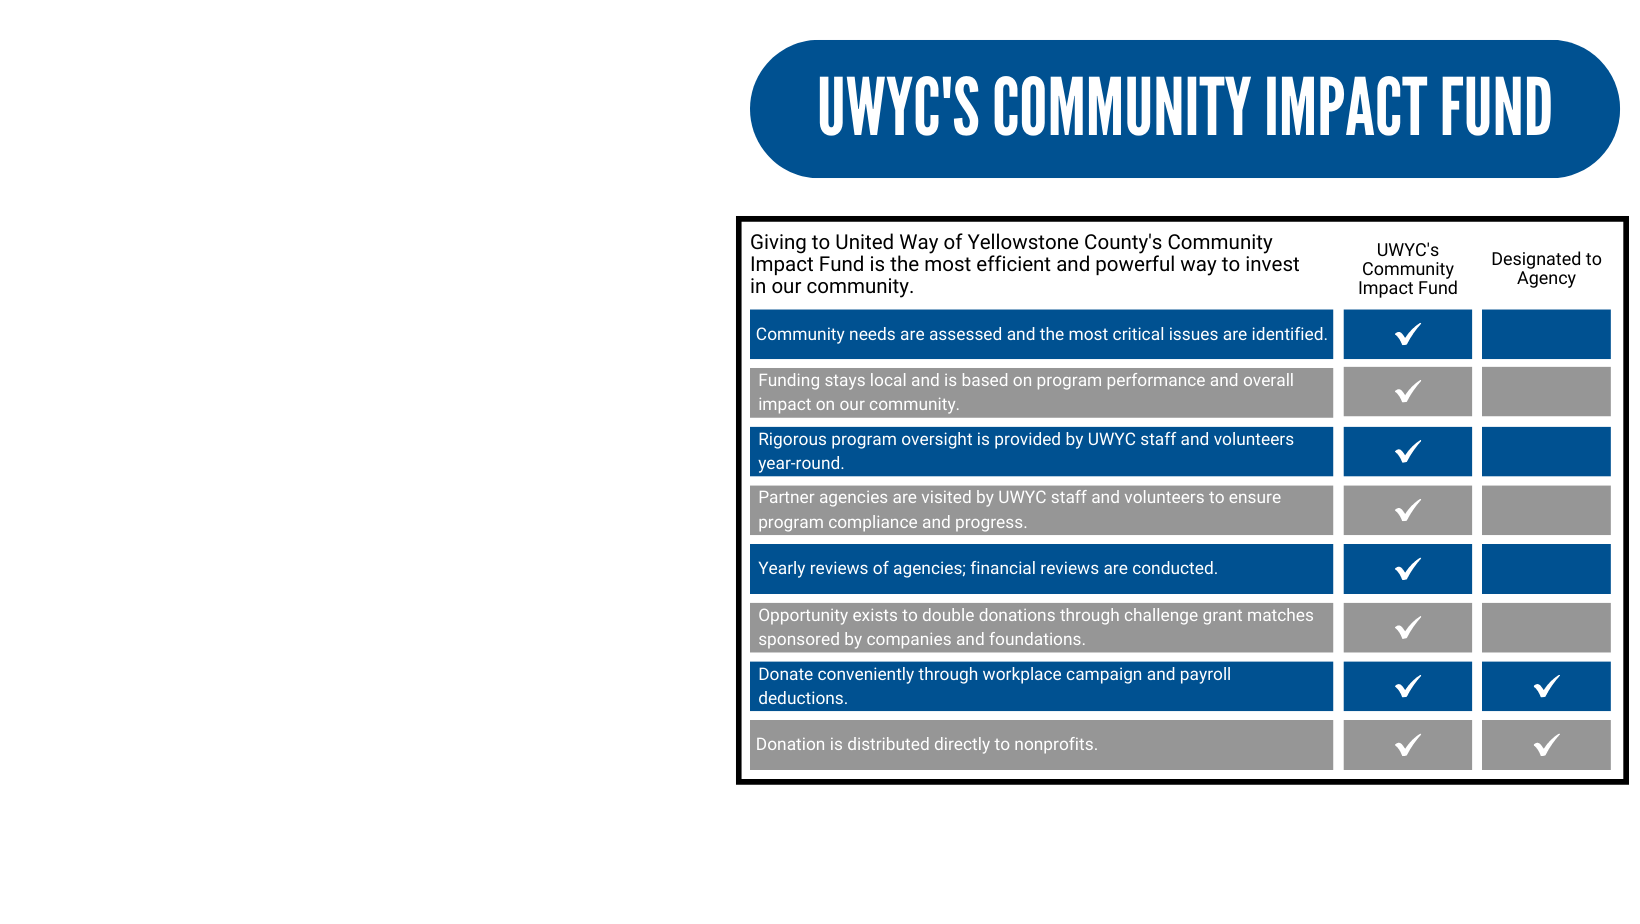 UWYC community impact fund information